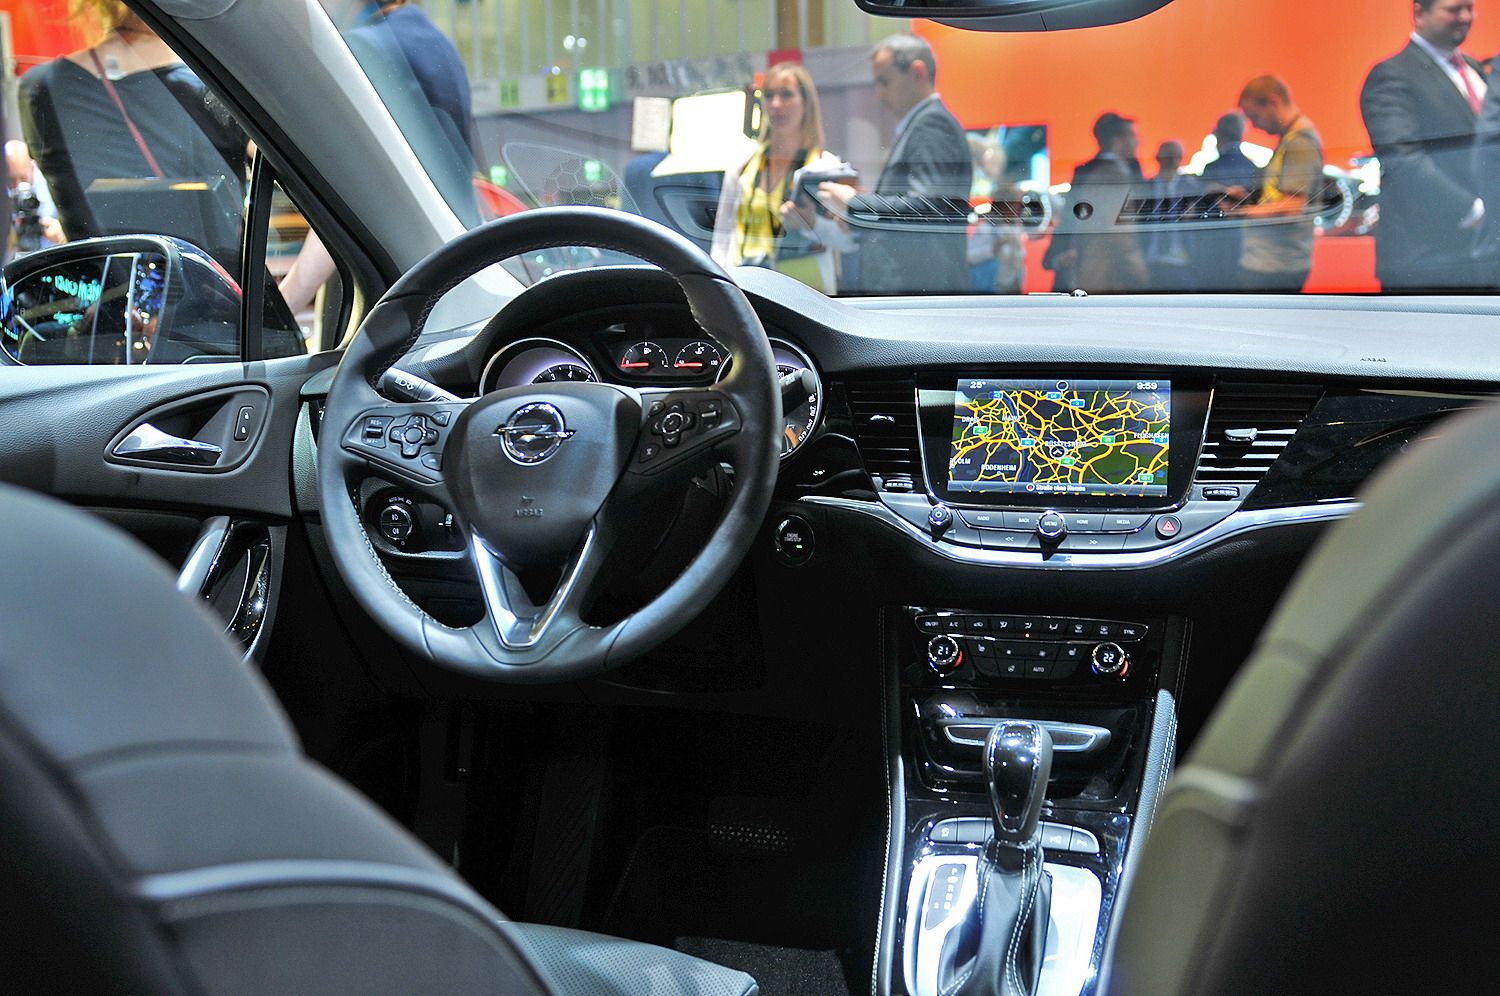 2016 Opel Astra